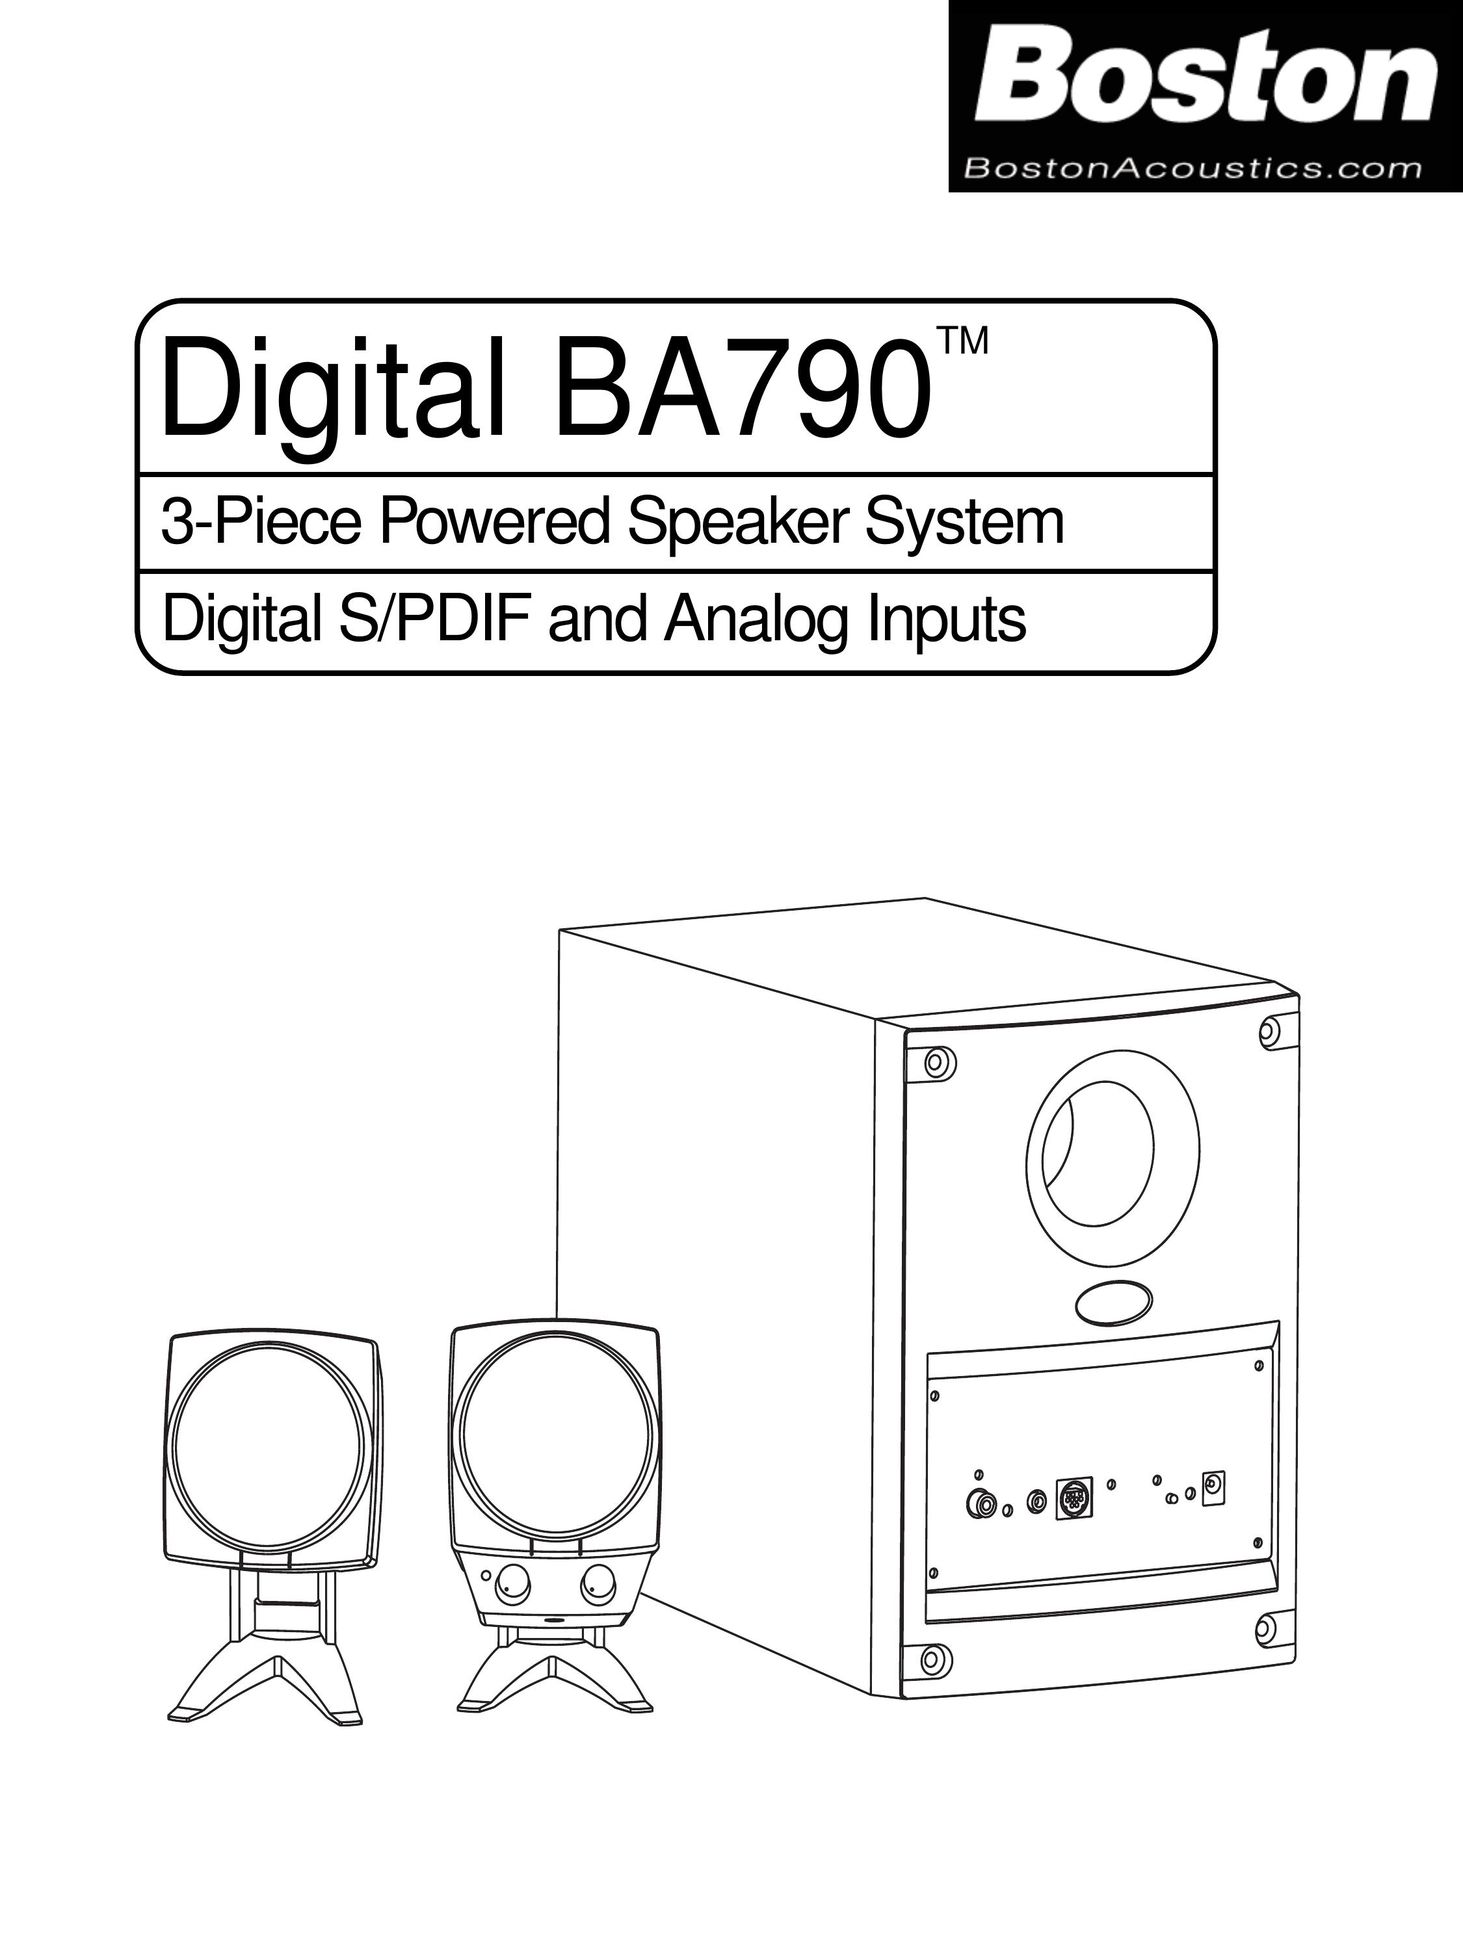 Boston Acoustics Digital BA790 Portable Speaker User Manual